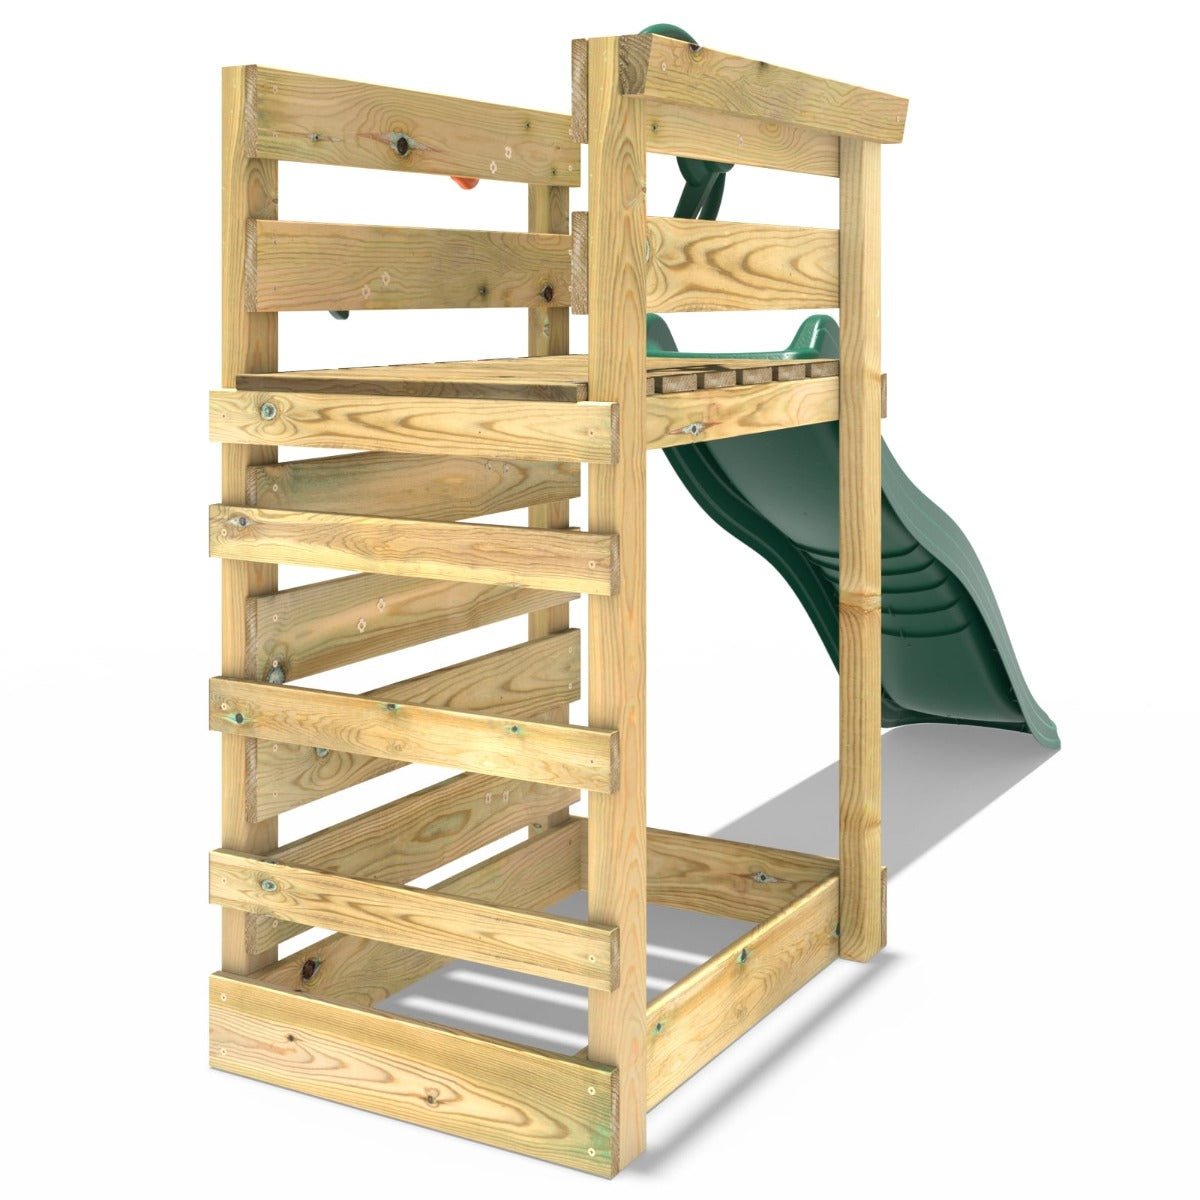 Adventure Pack Add-on Wooden Platform with 6FT Slide for Rebo Swing Sets - Dark Green